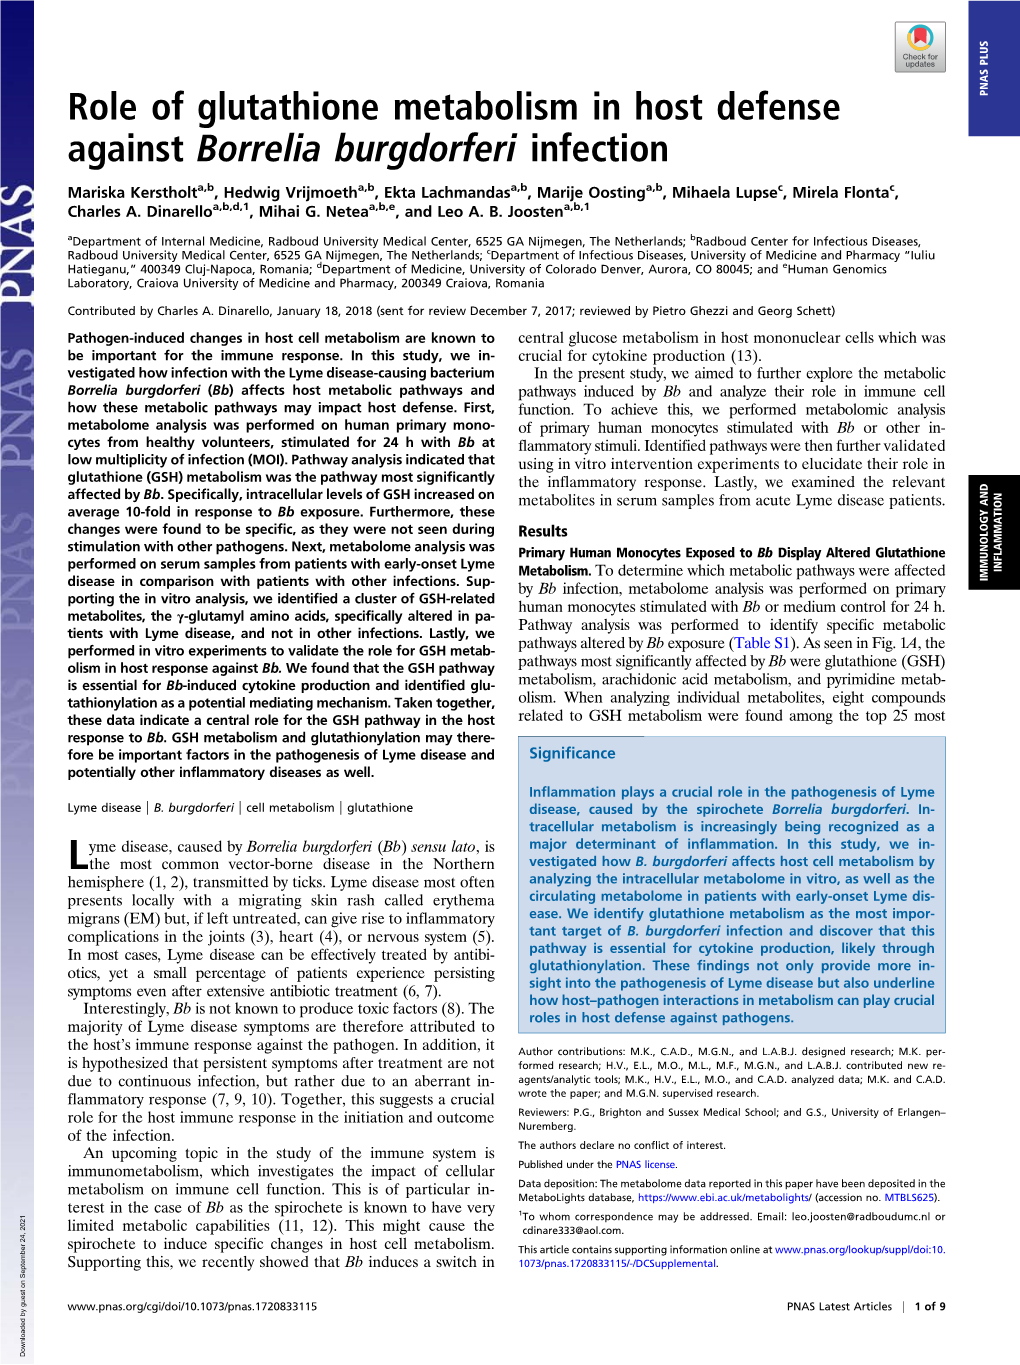 Role of Glutathione Metabolism in Host Defense Against Borrelia